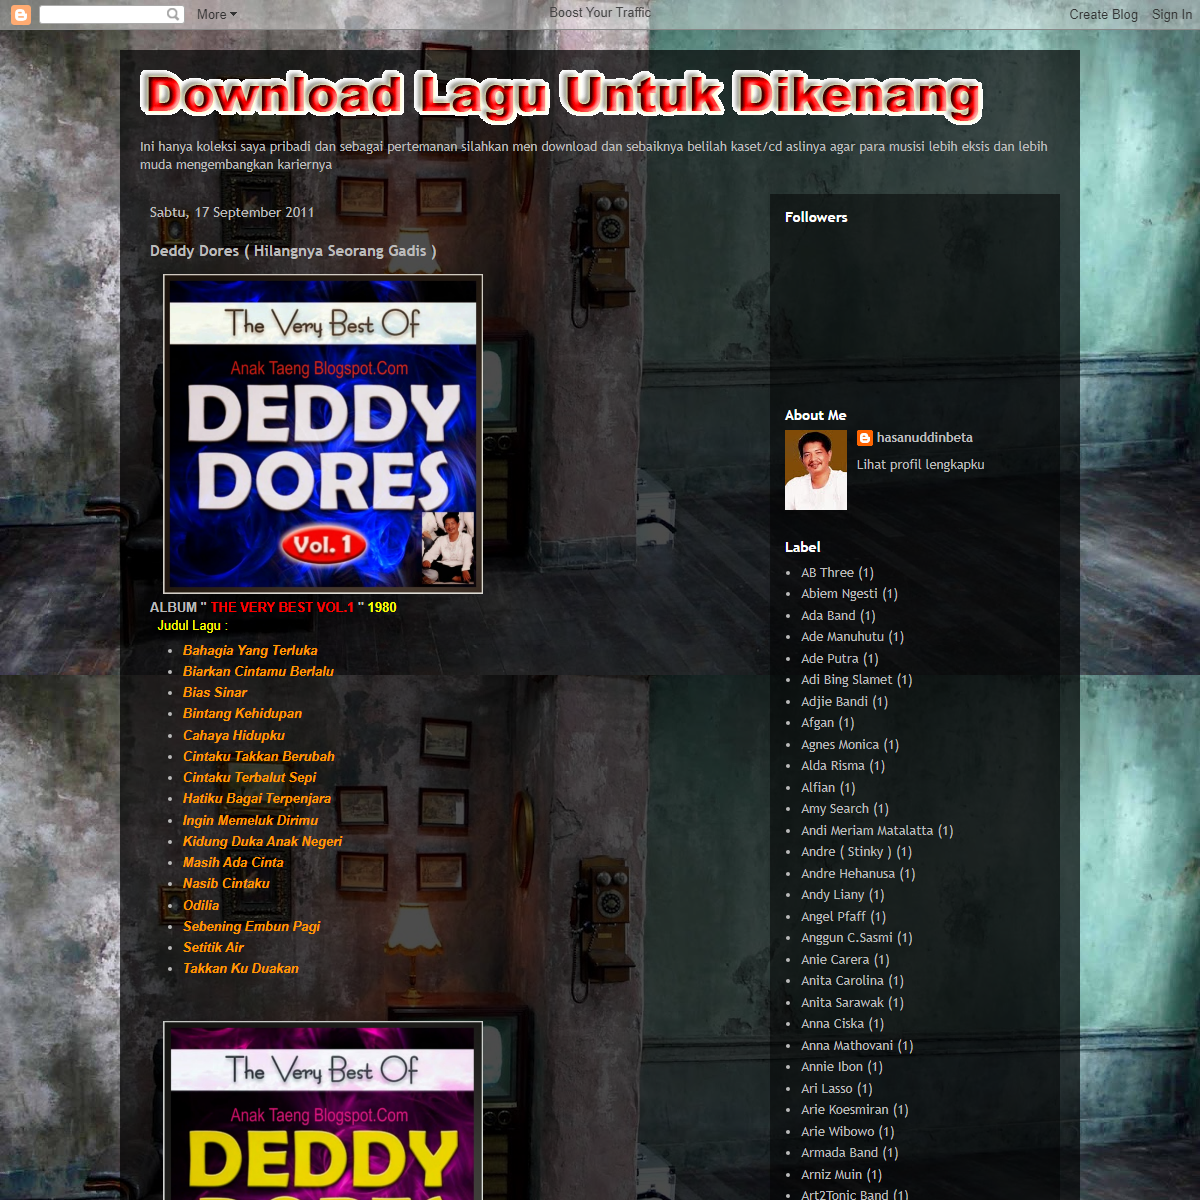 A complete backup of https://anaktaeng.blogspot.com/2011/09/deddy-dores.html